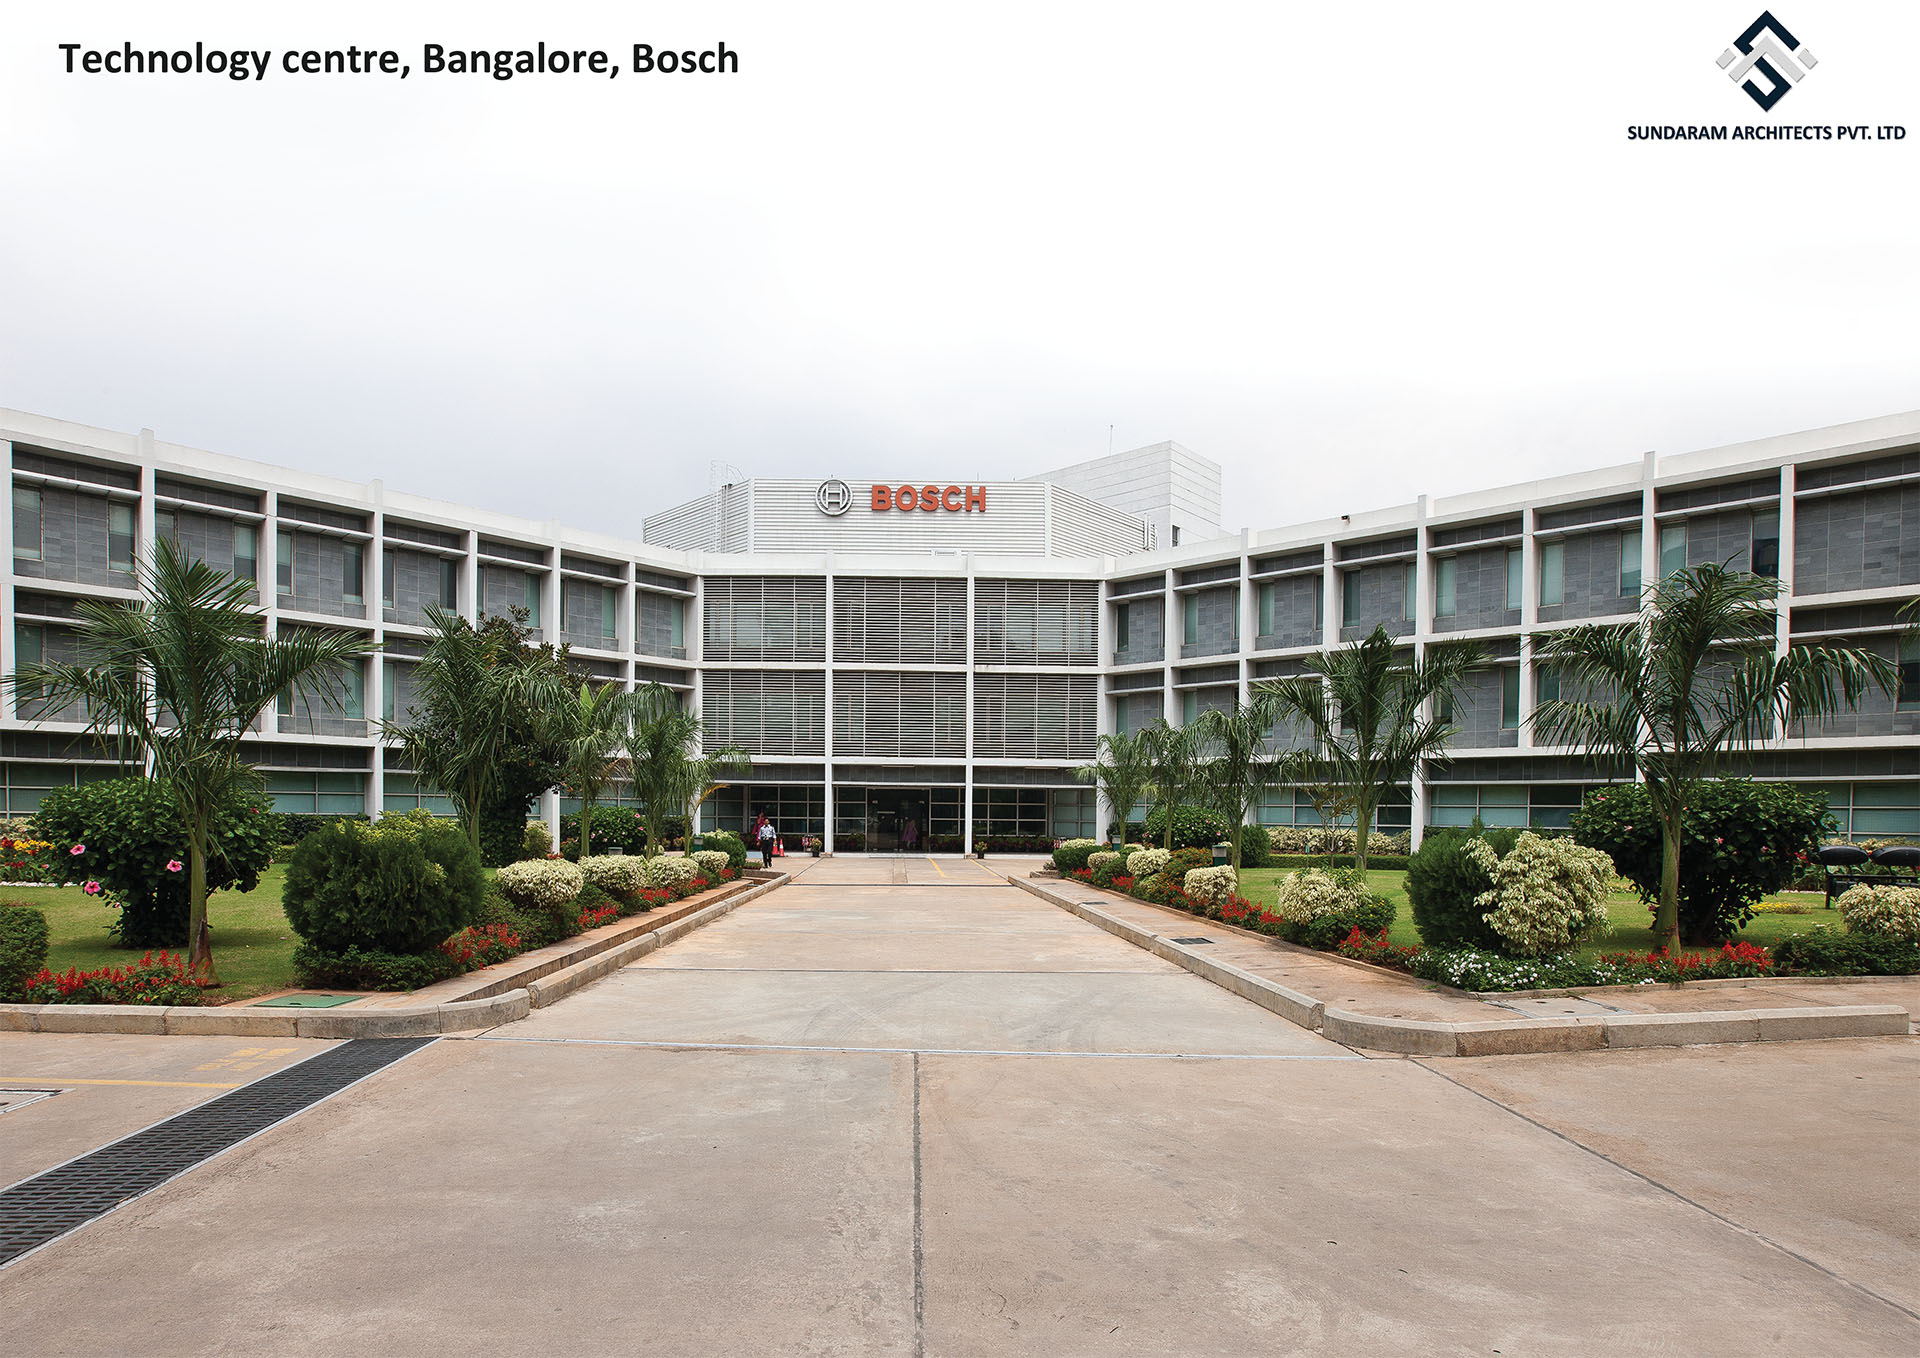 Technology Centre, Bangalore, Bosch - Science & Technology Design